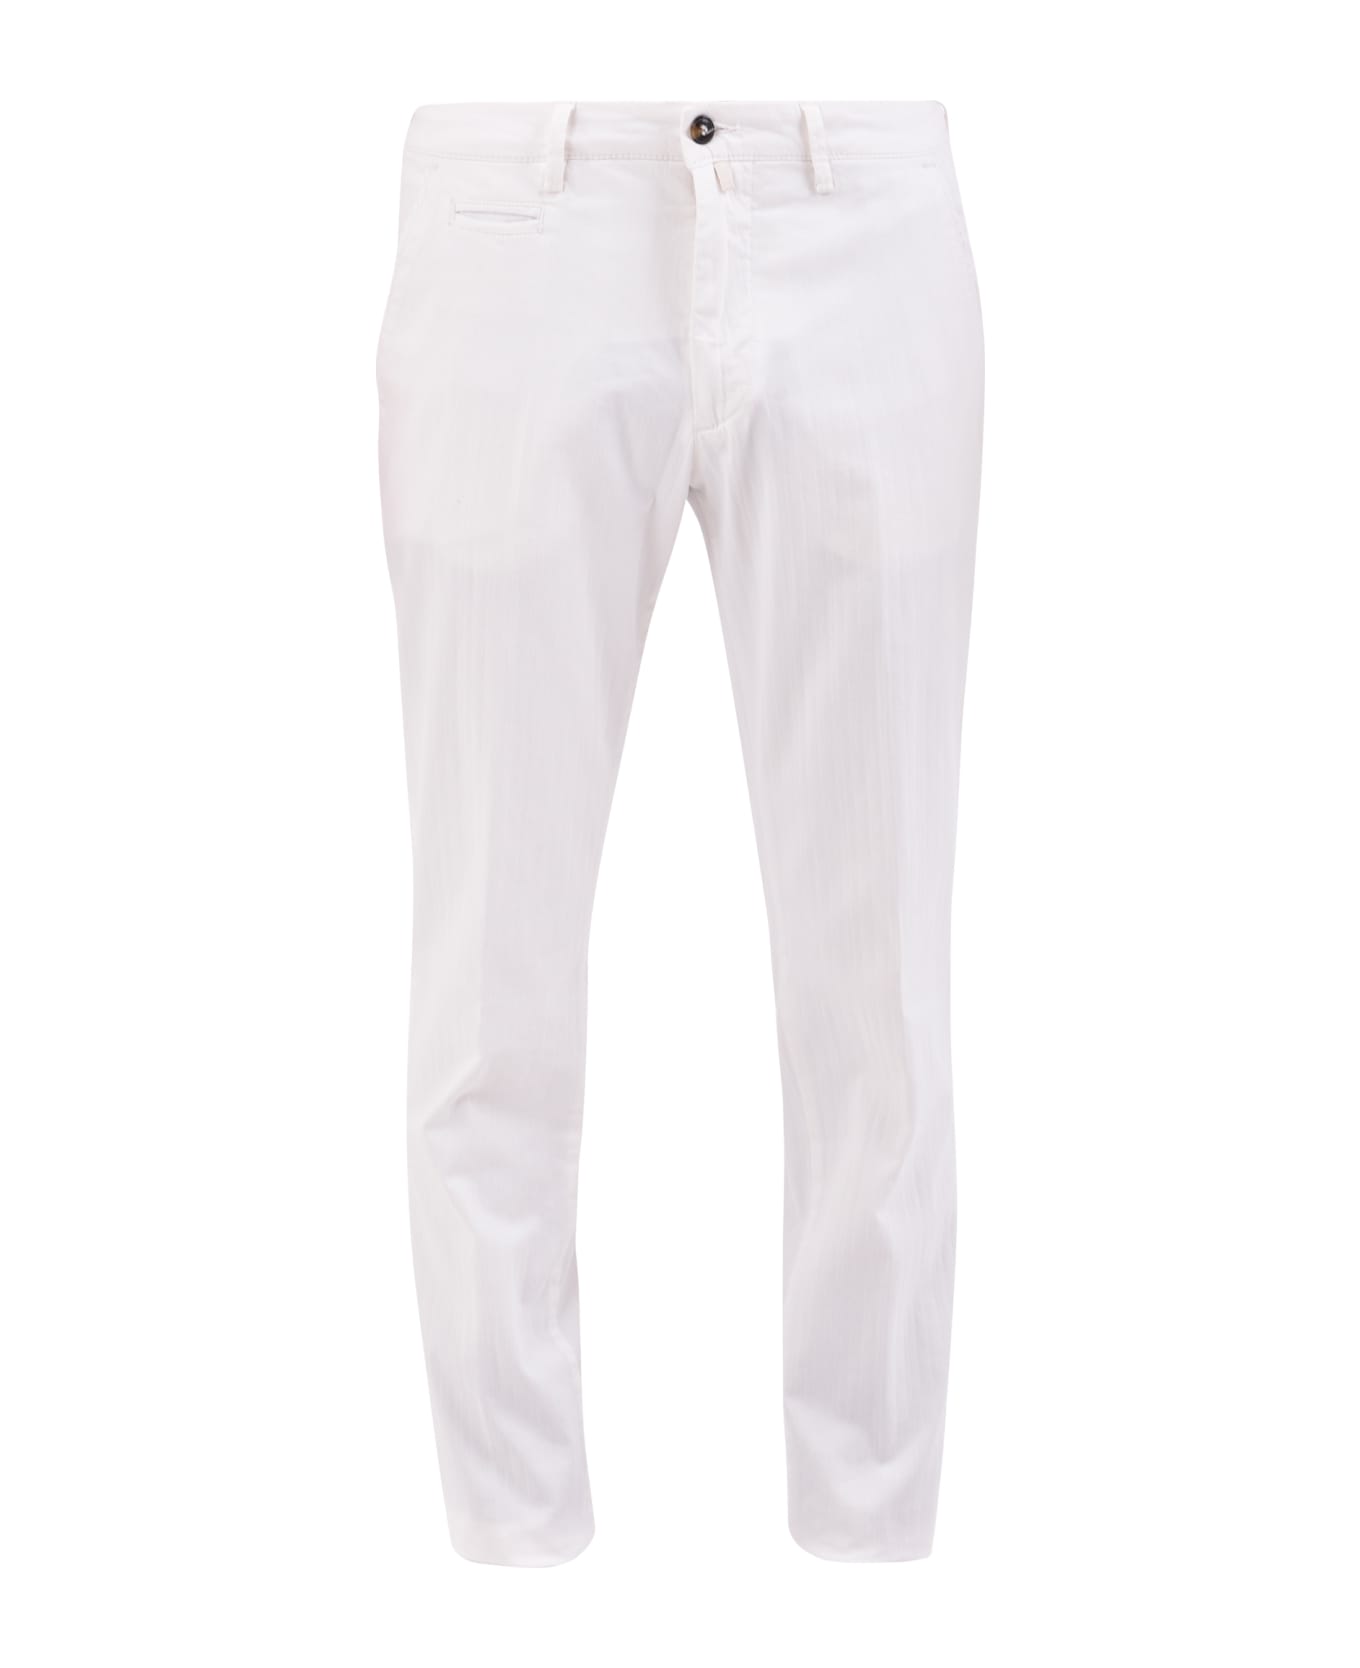 Briglia 1949 White Trousers - White ボトムス